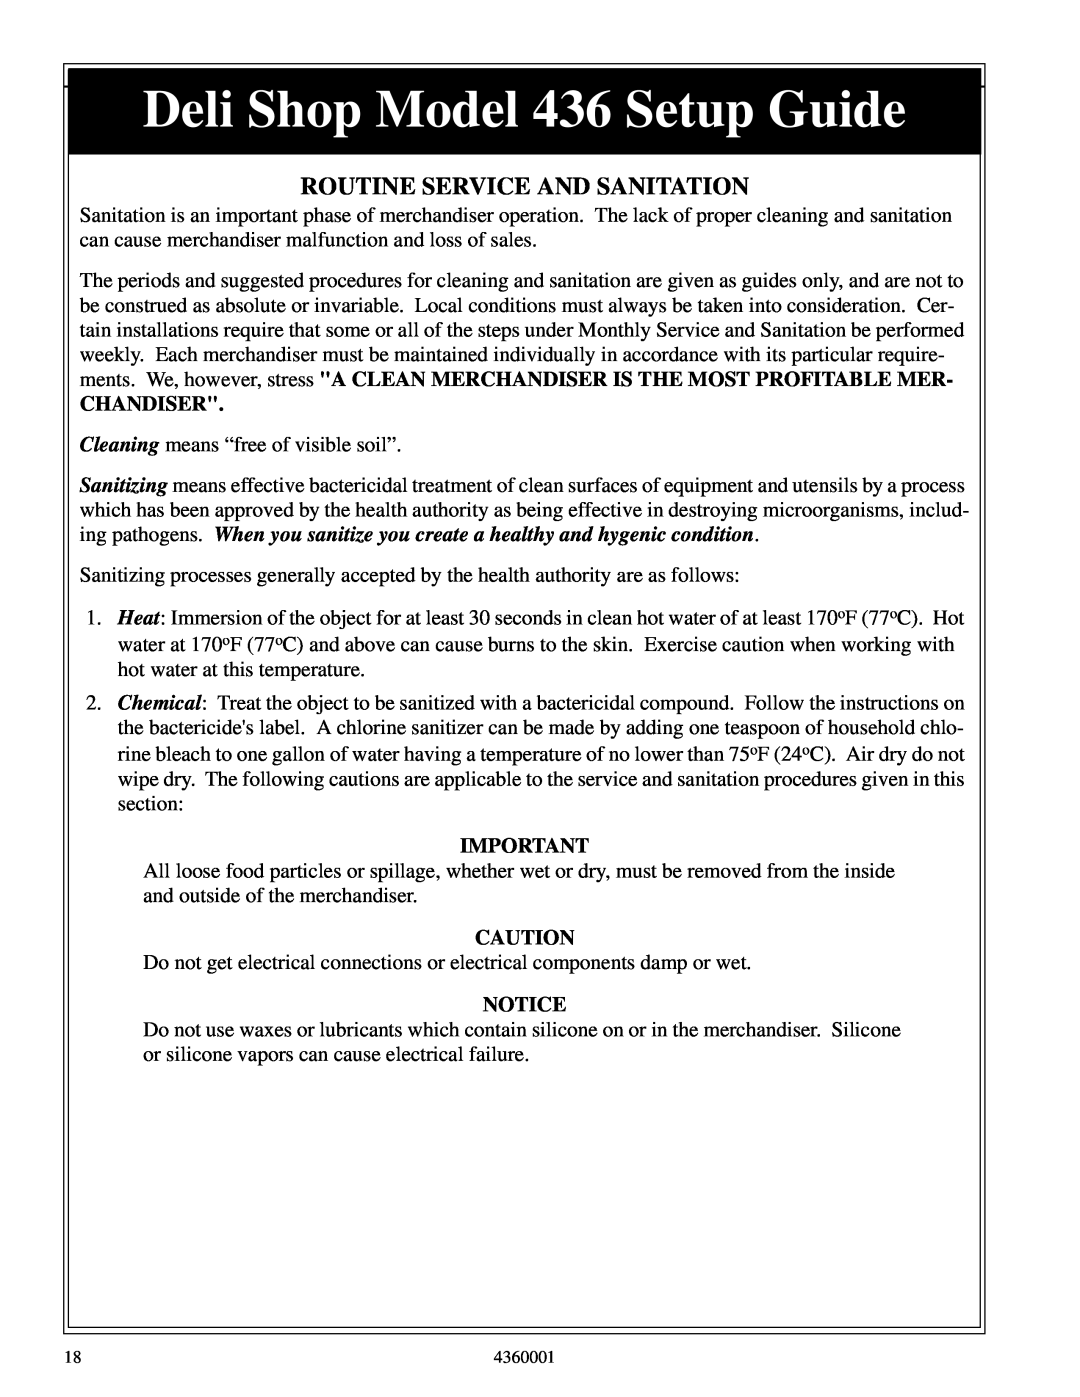 Crane Merchandising Systems manual Routine Service And Sanitation, Chandiser, Deli Shop Model 436 Setup Guide 